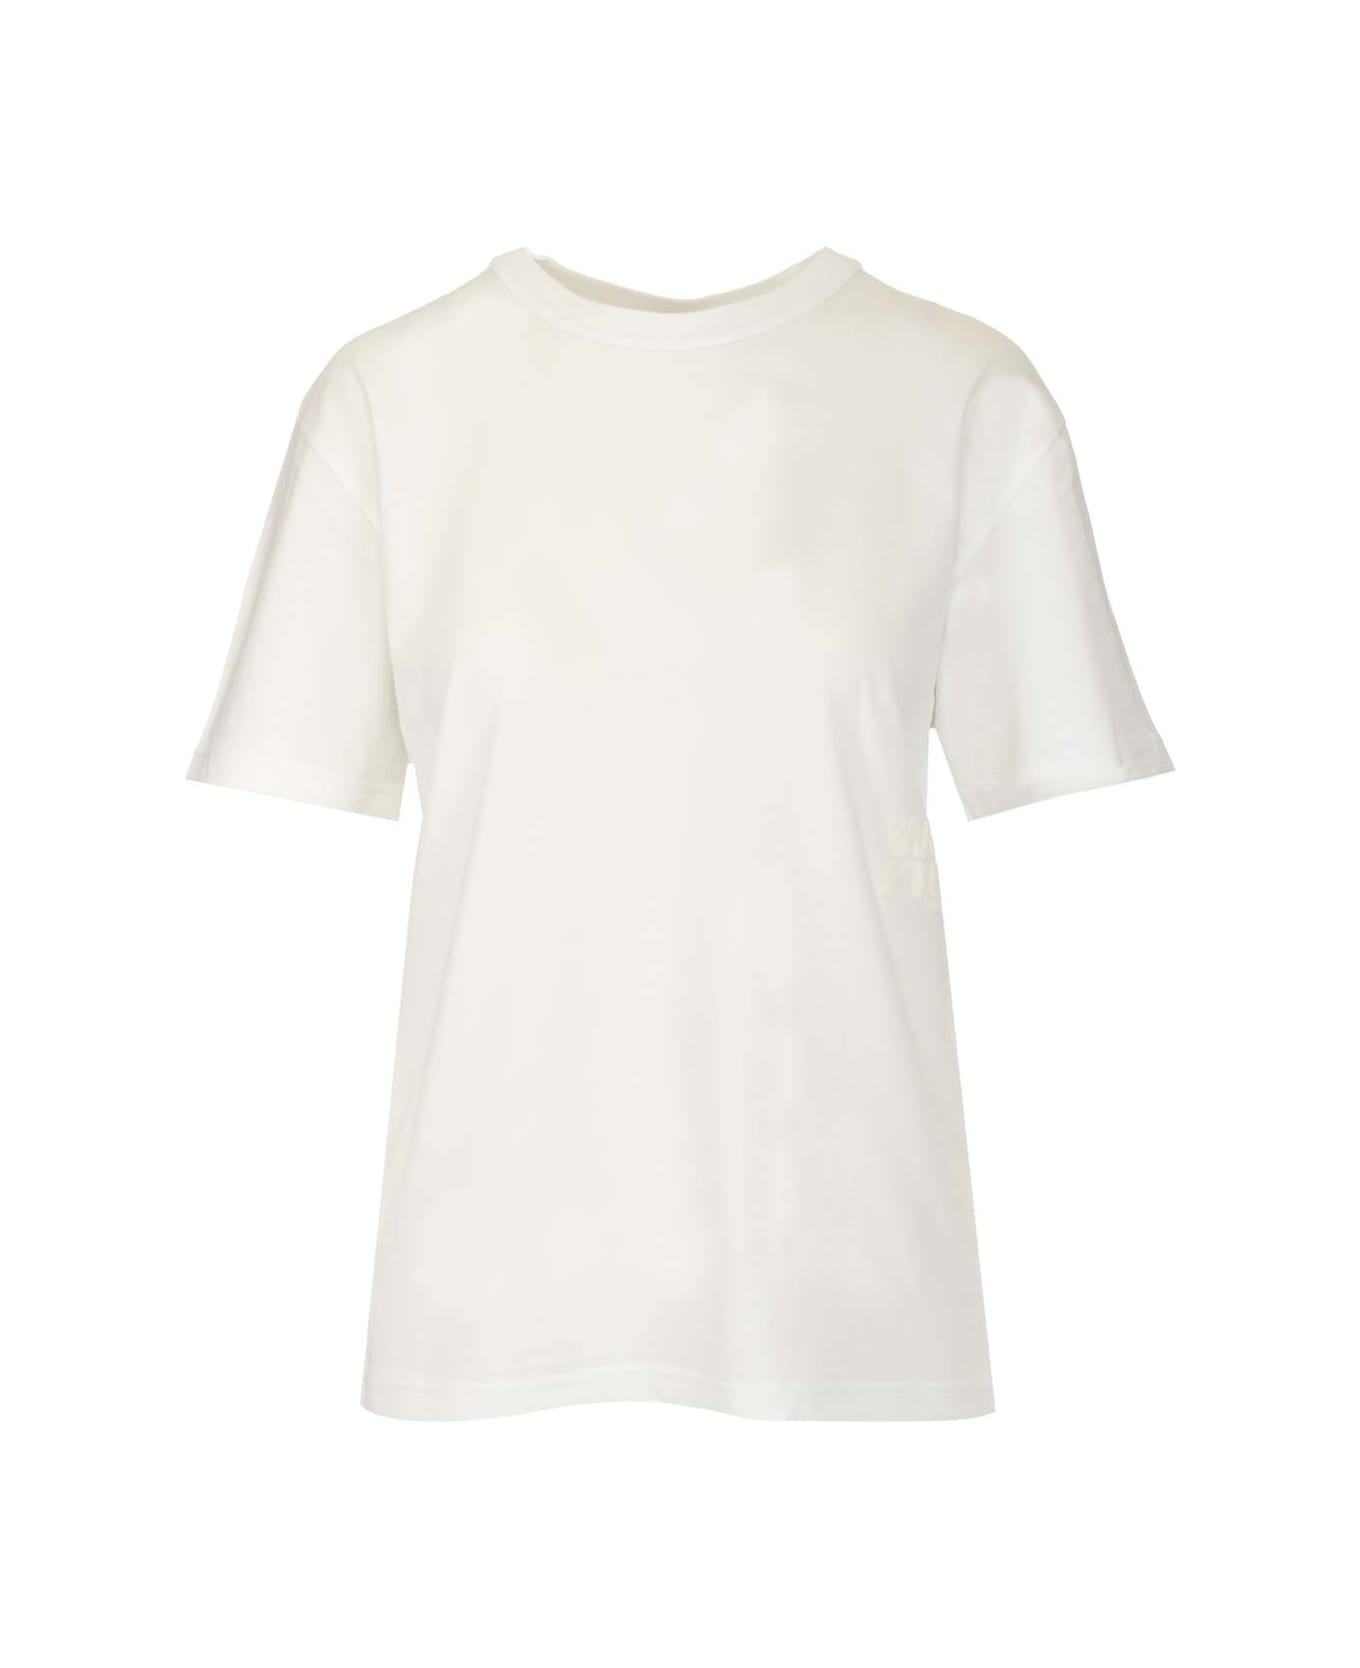 Alexander Wang Essential White T-shirt - 100 WHITE Tシャツ